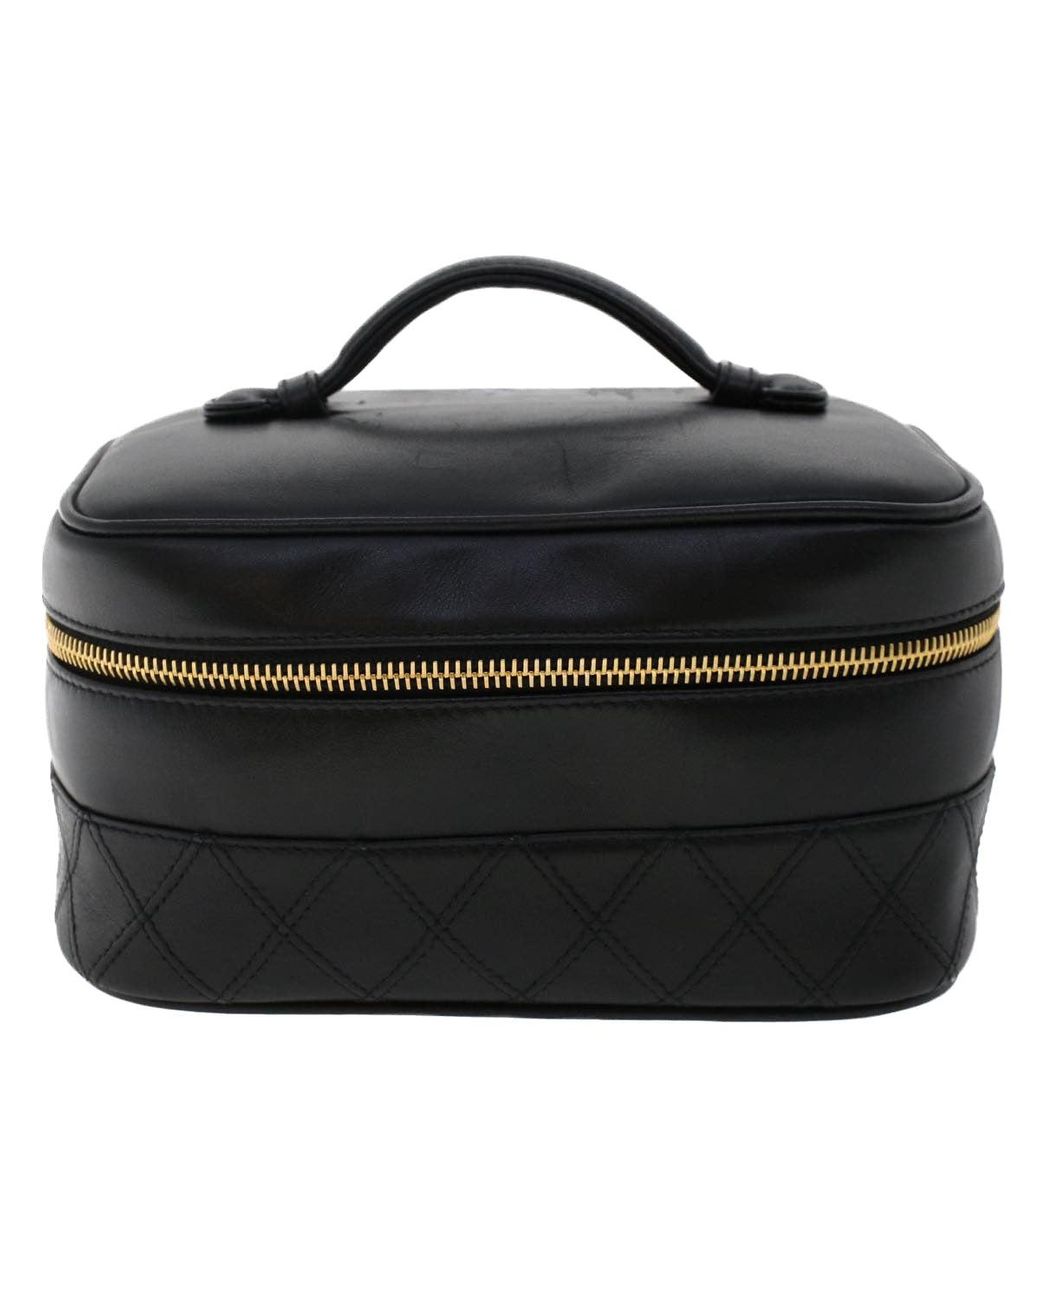 classic chanel clutch bag black